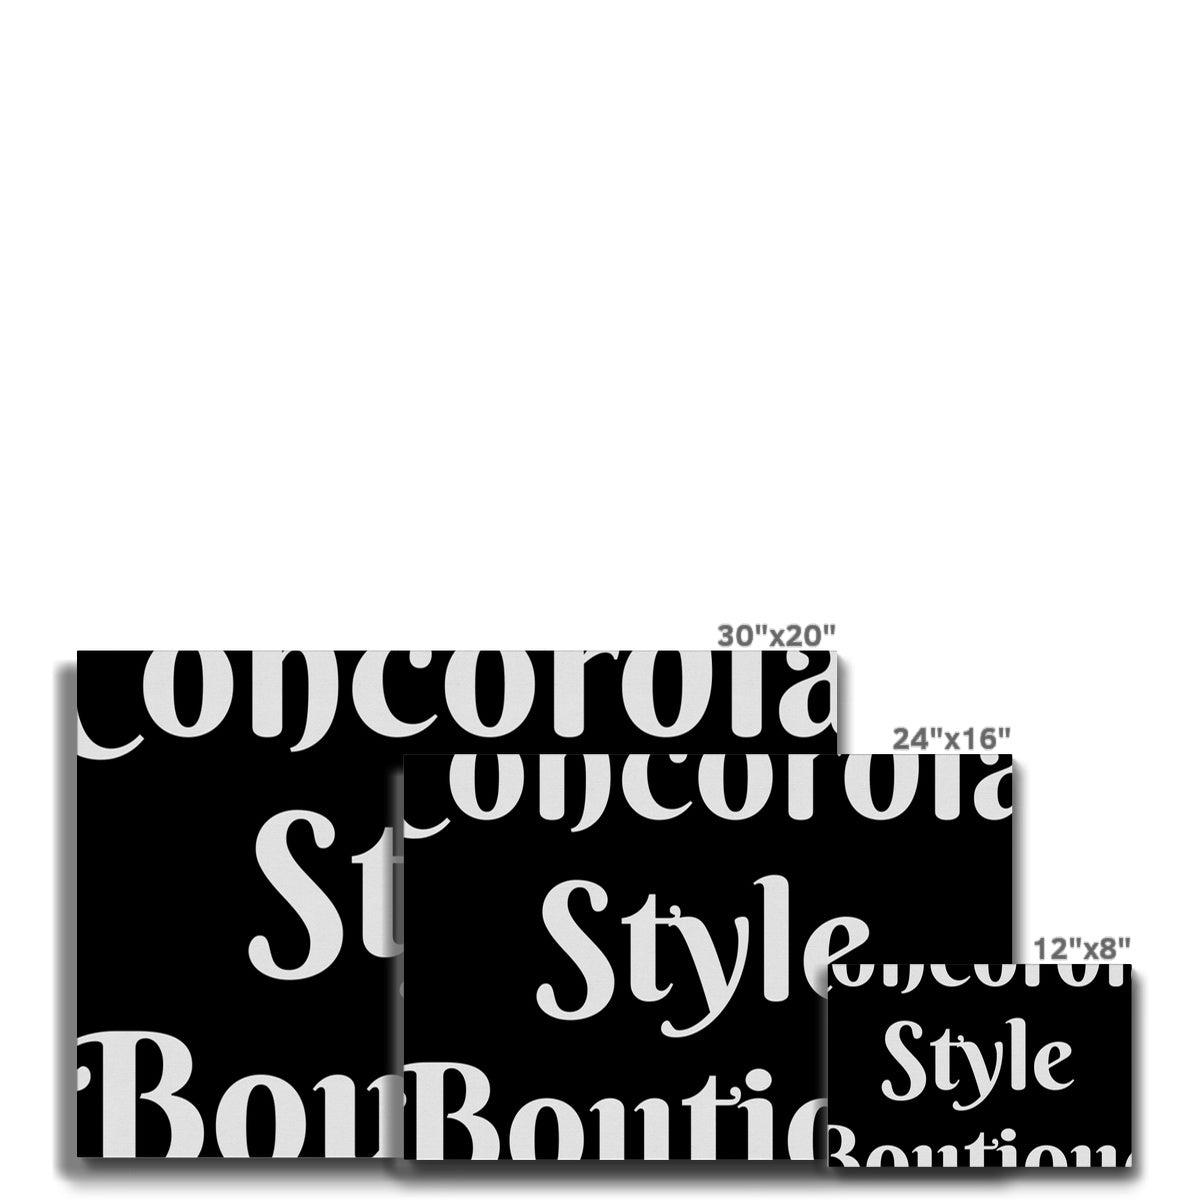 Concordia Style Boutique Eco Canvas - Premium Fine art from Prodigi - Just $11.65! Shop now at Concordia Style Boutique